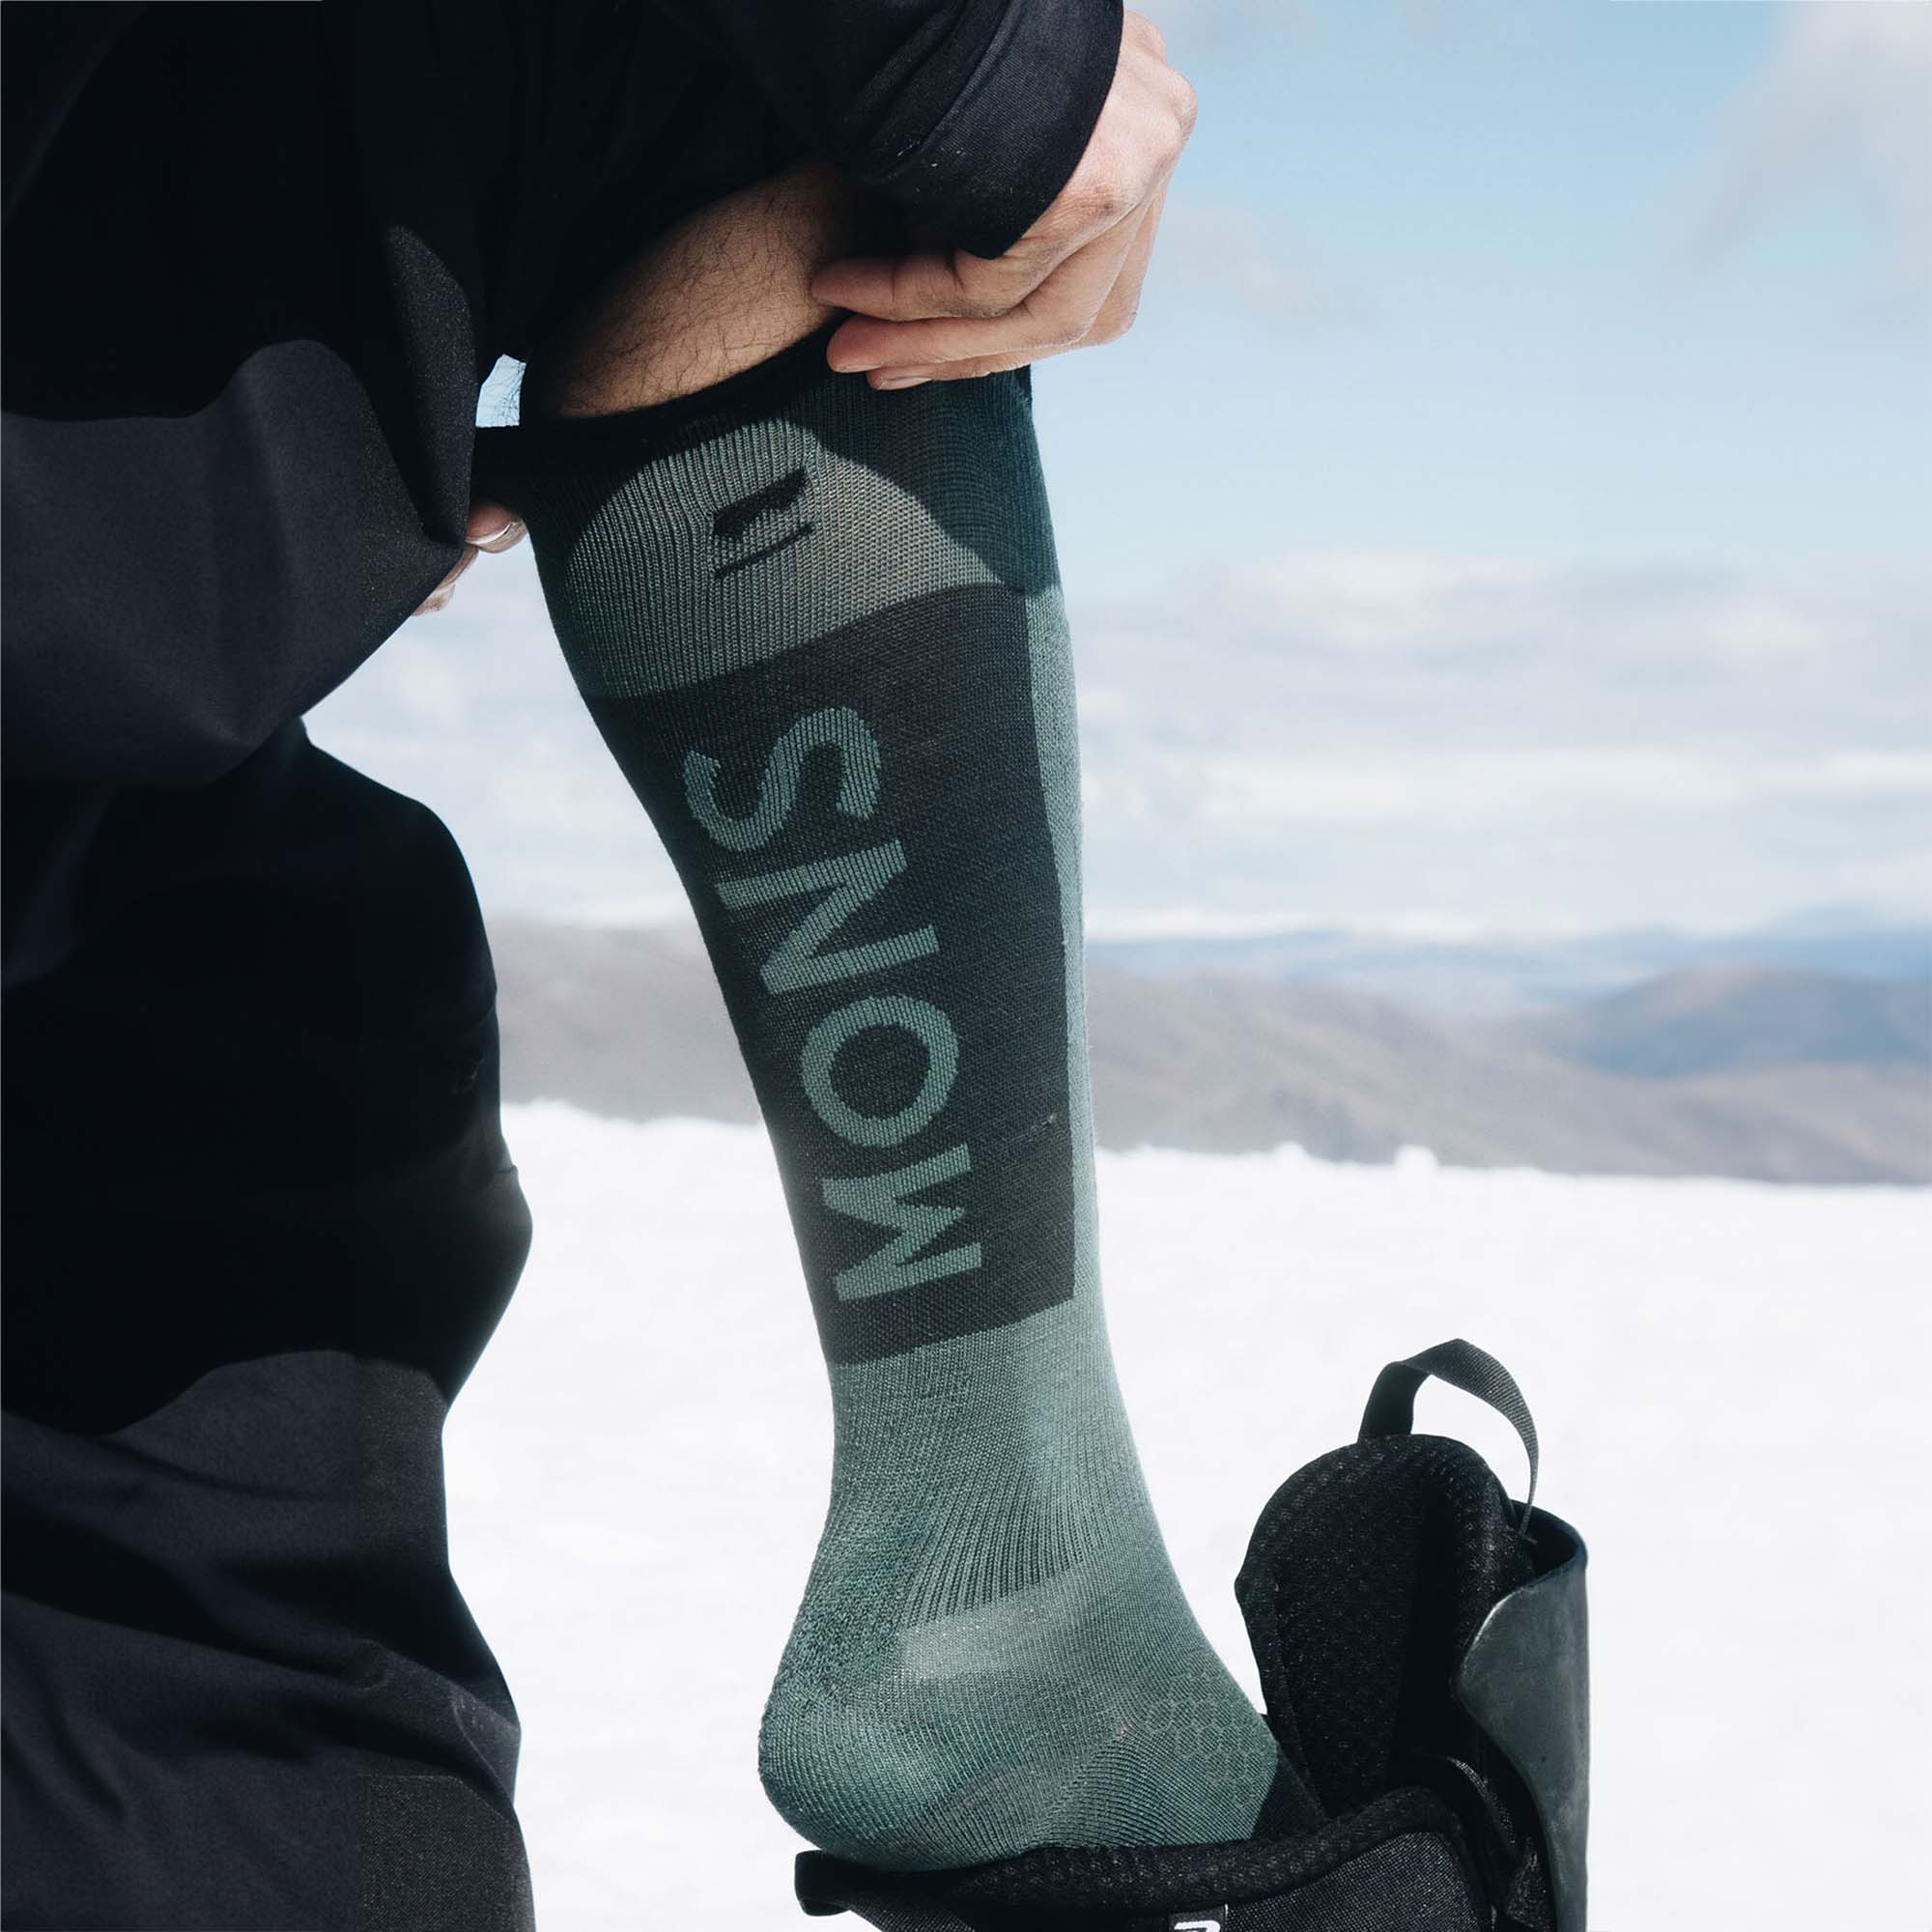 Mons Royale Atlas Merino Unisex Ski/Snowboard Socks